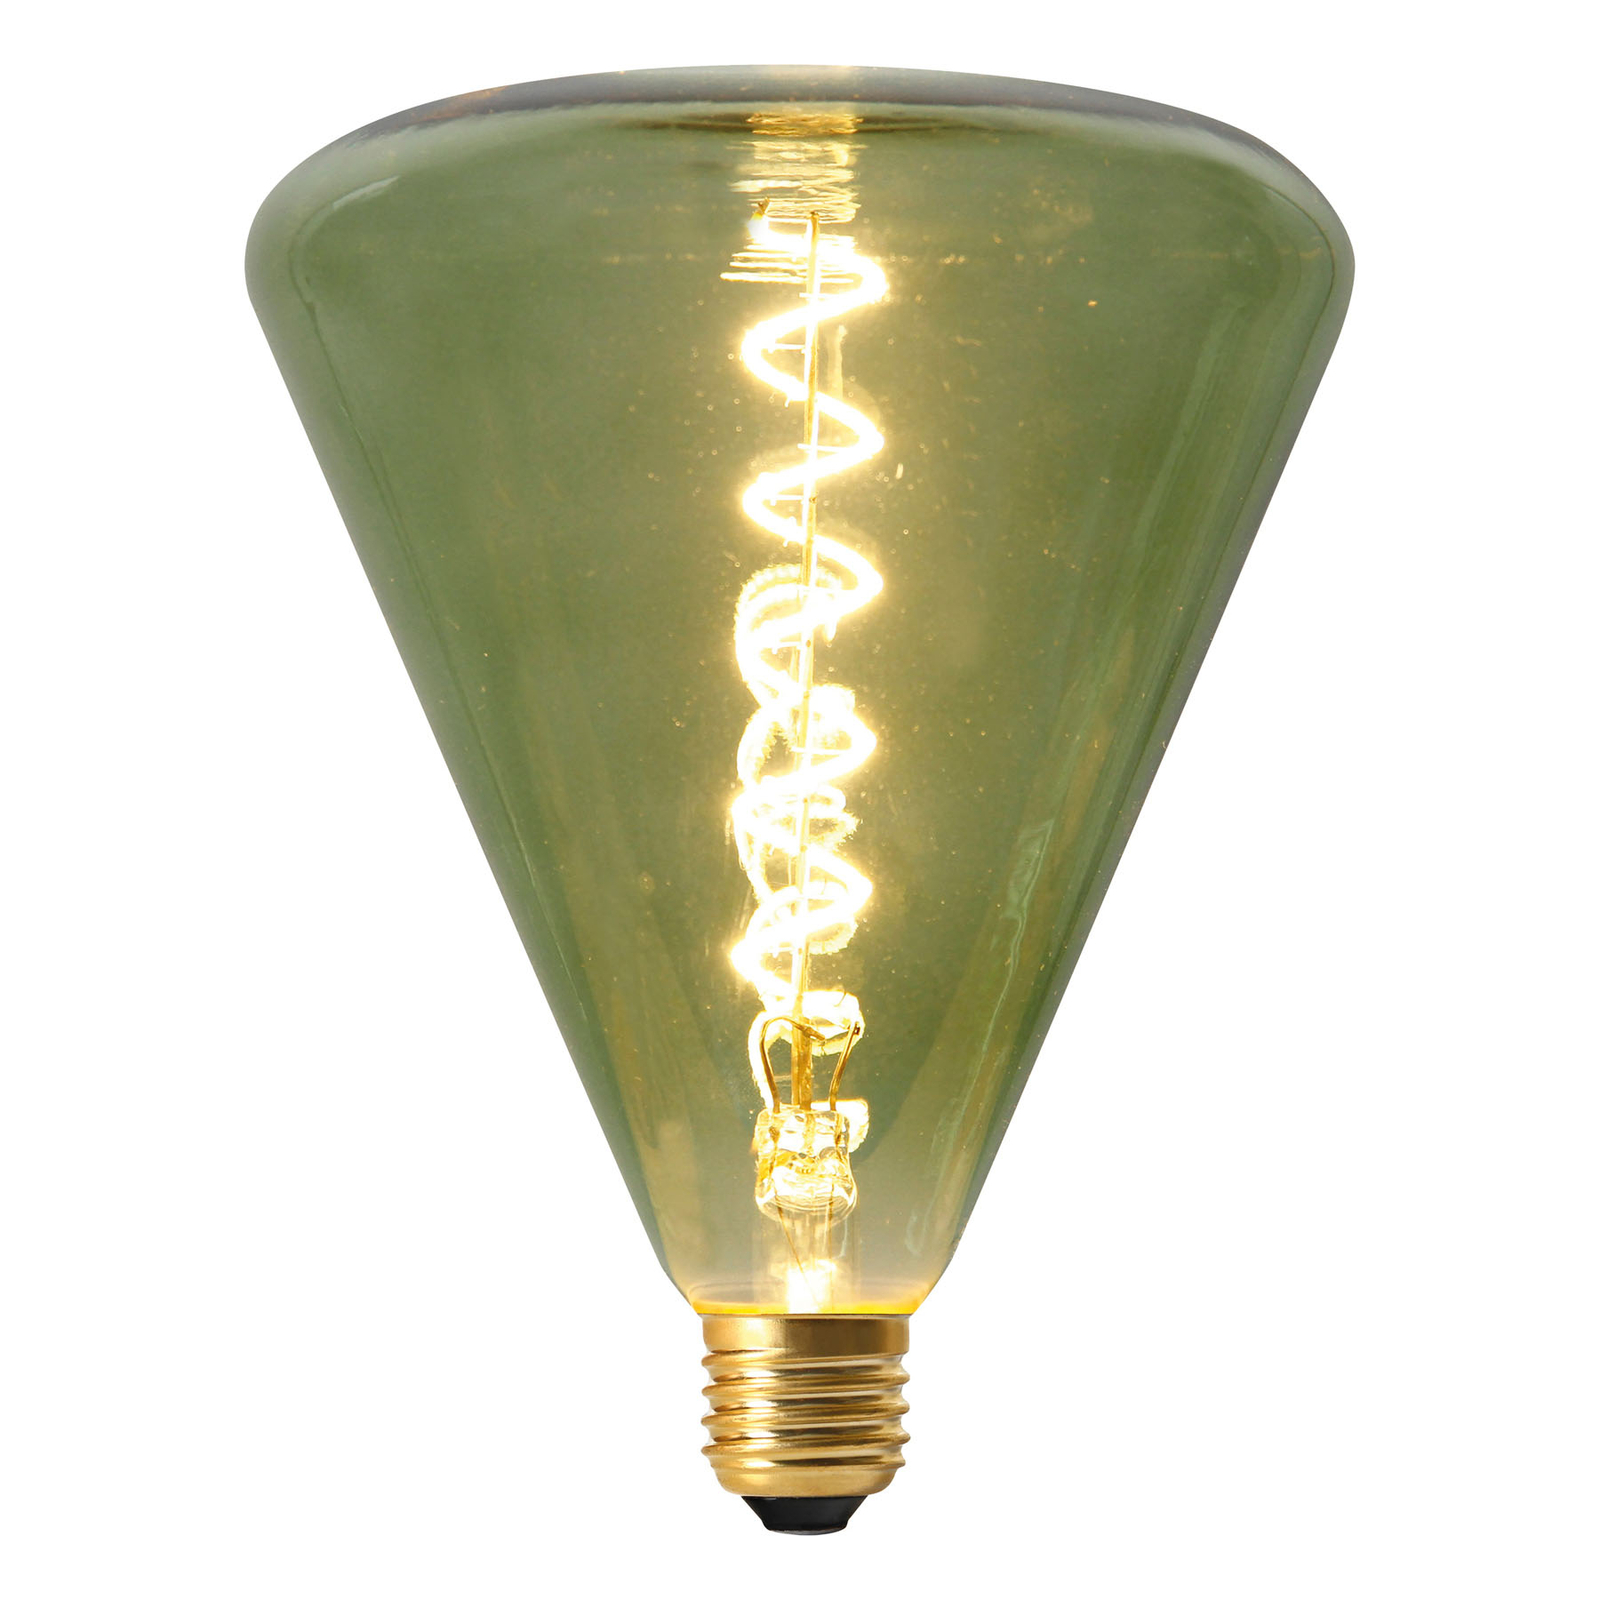 Ontkennen Geest academisch LED lamp Dilly E27 4W 2200K dimbaar, groen getint | Lampen24.be